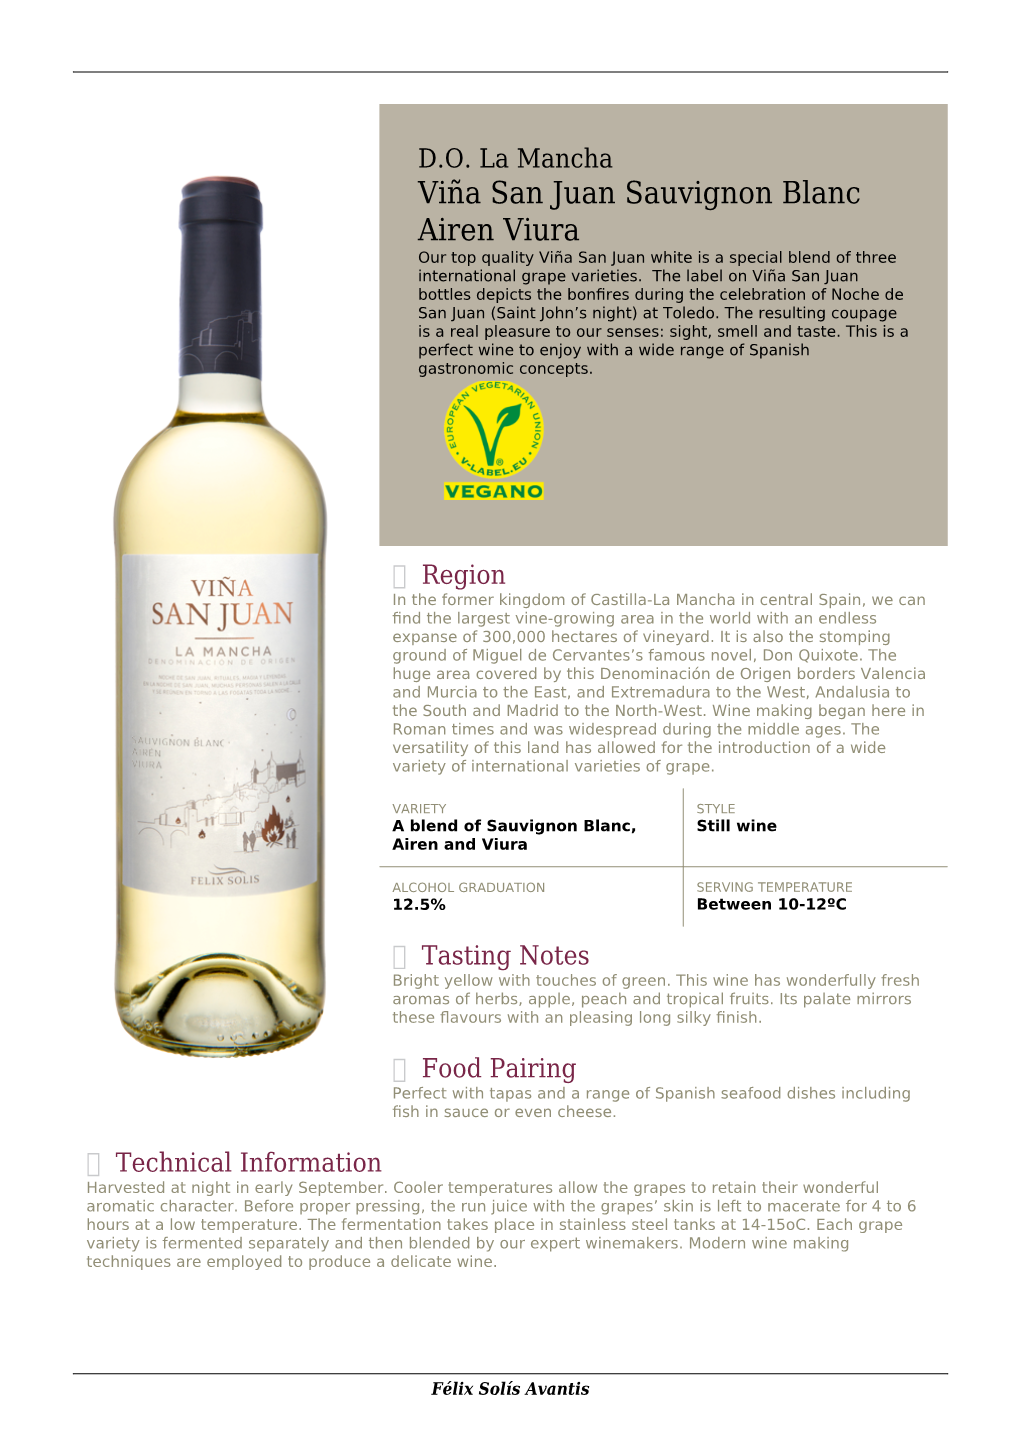 Viña San Juan Sauvignon Blanc Airen Viura Our Top Quality Viña San Juan White Is a Special Blend of Three International Grape Varieties